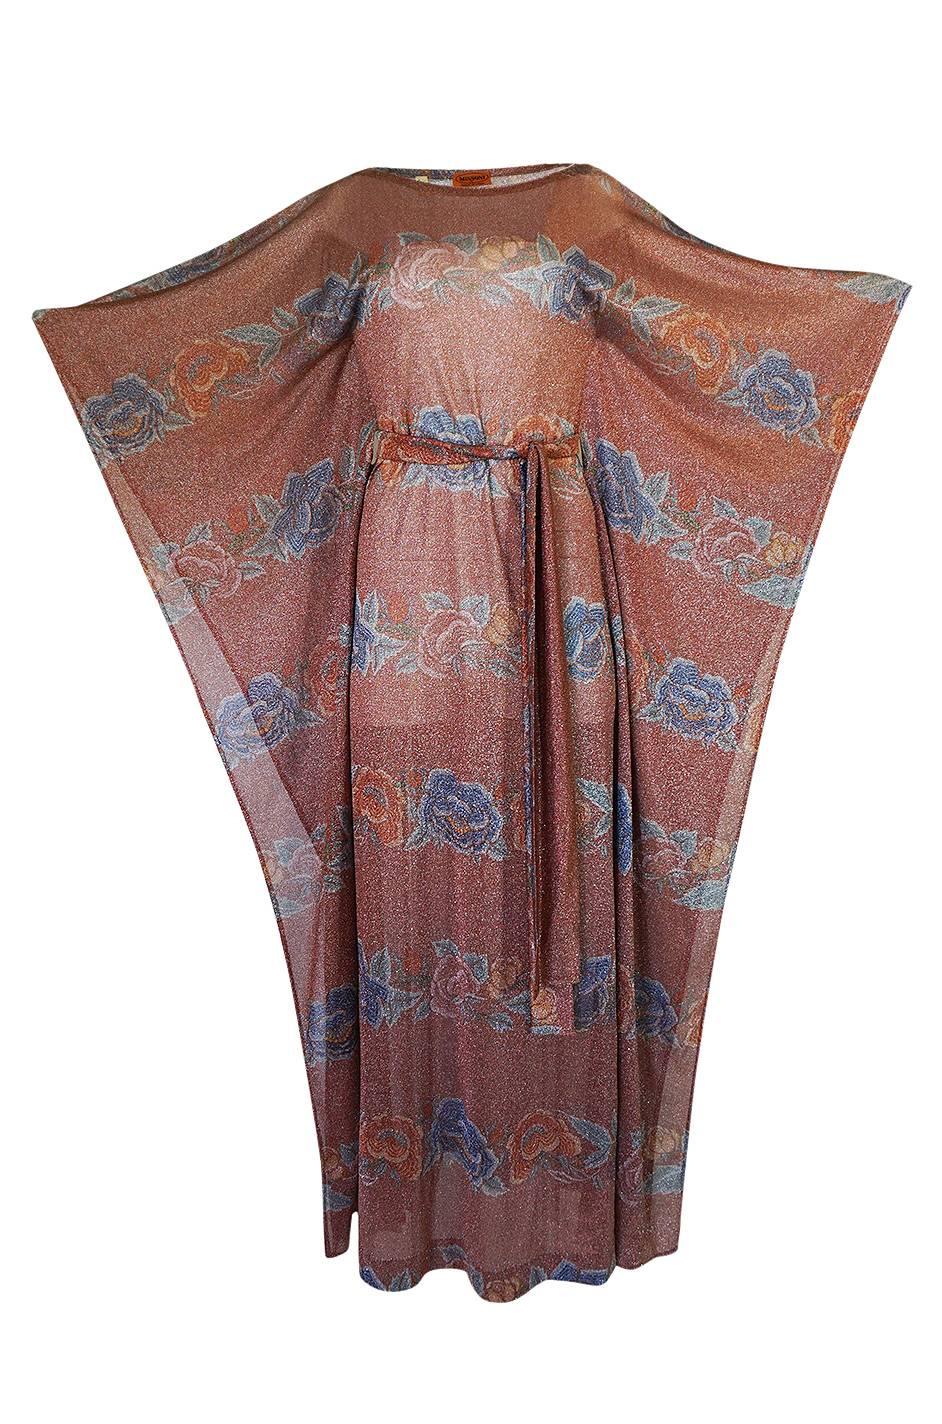 Missoni Floral Print Metallic Lurex Caftan Dress, circa 1972-73  1